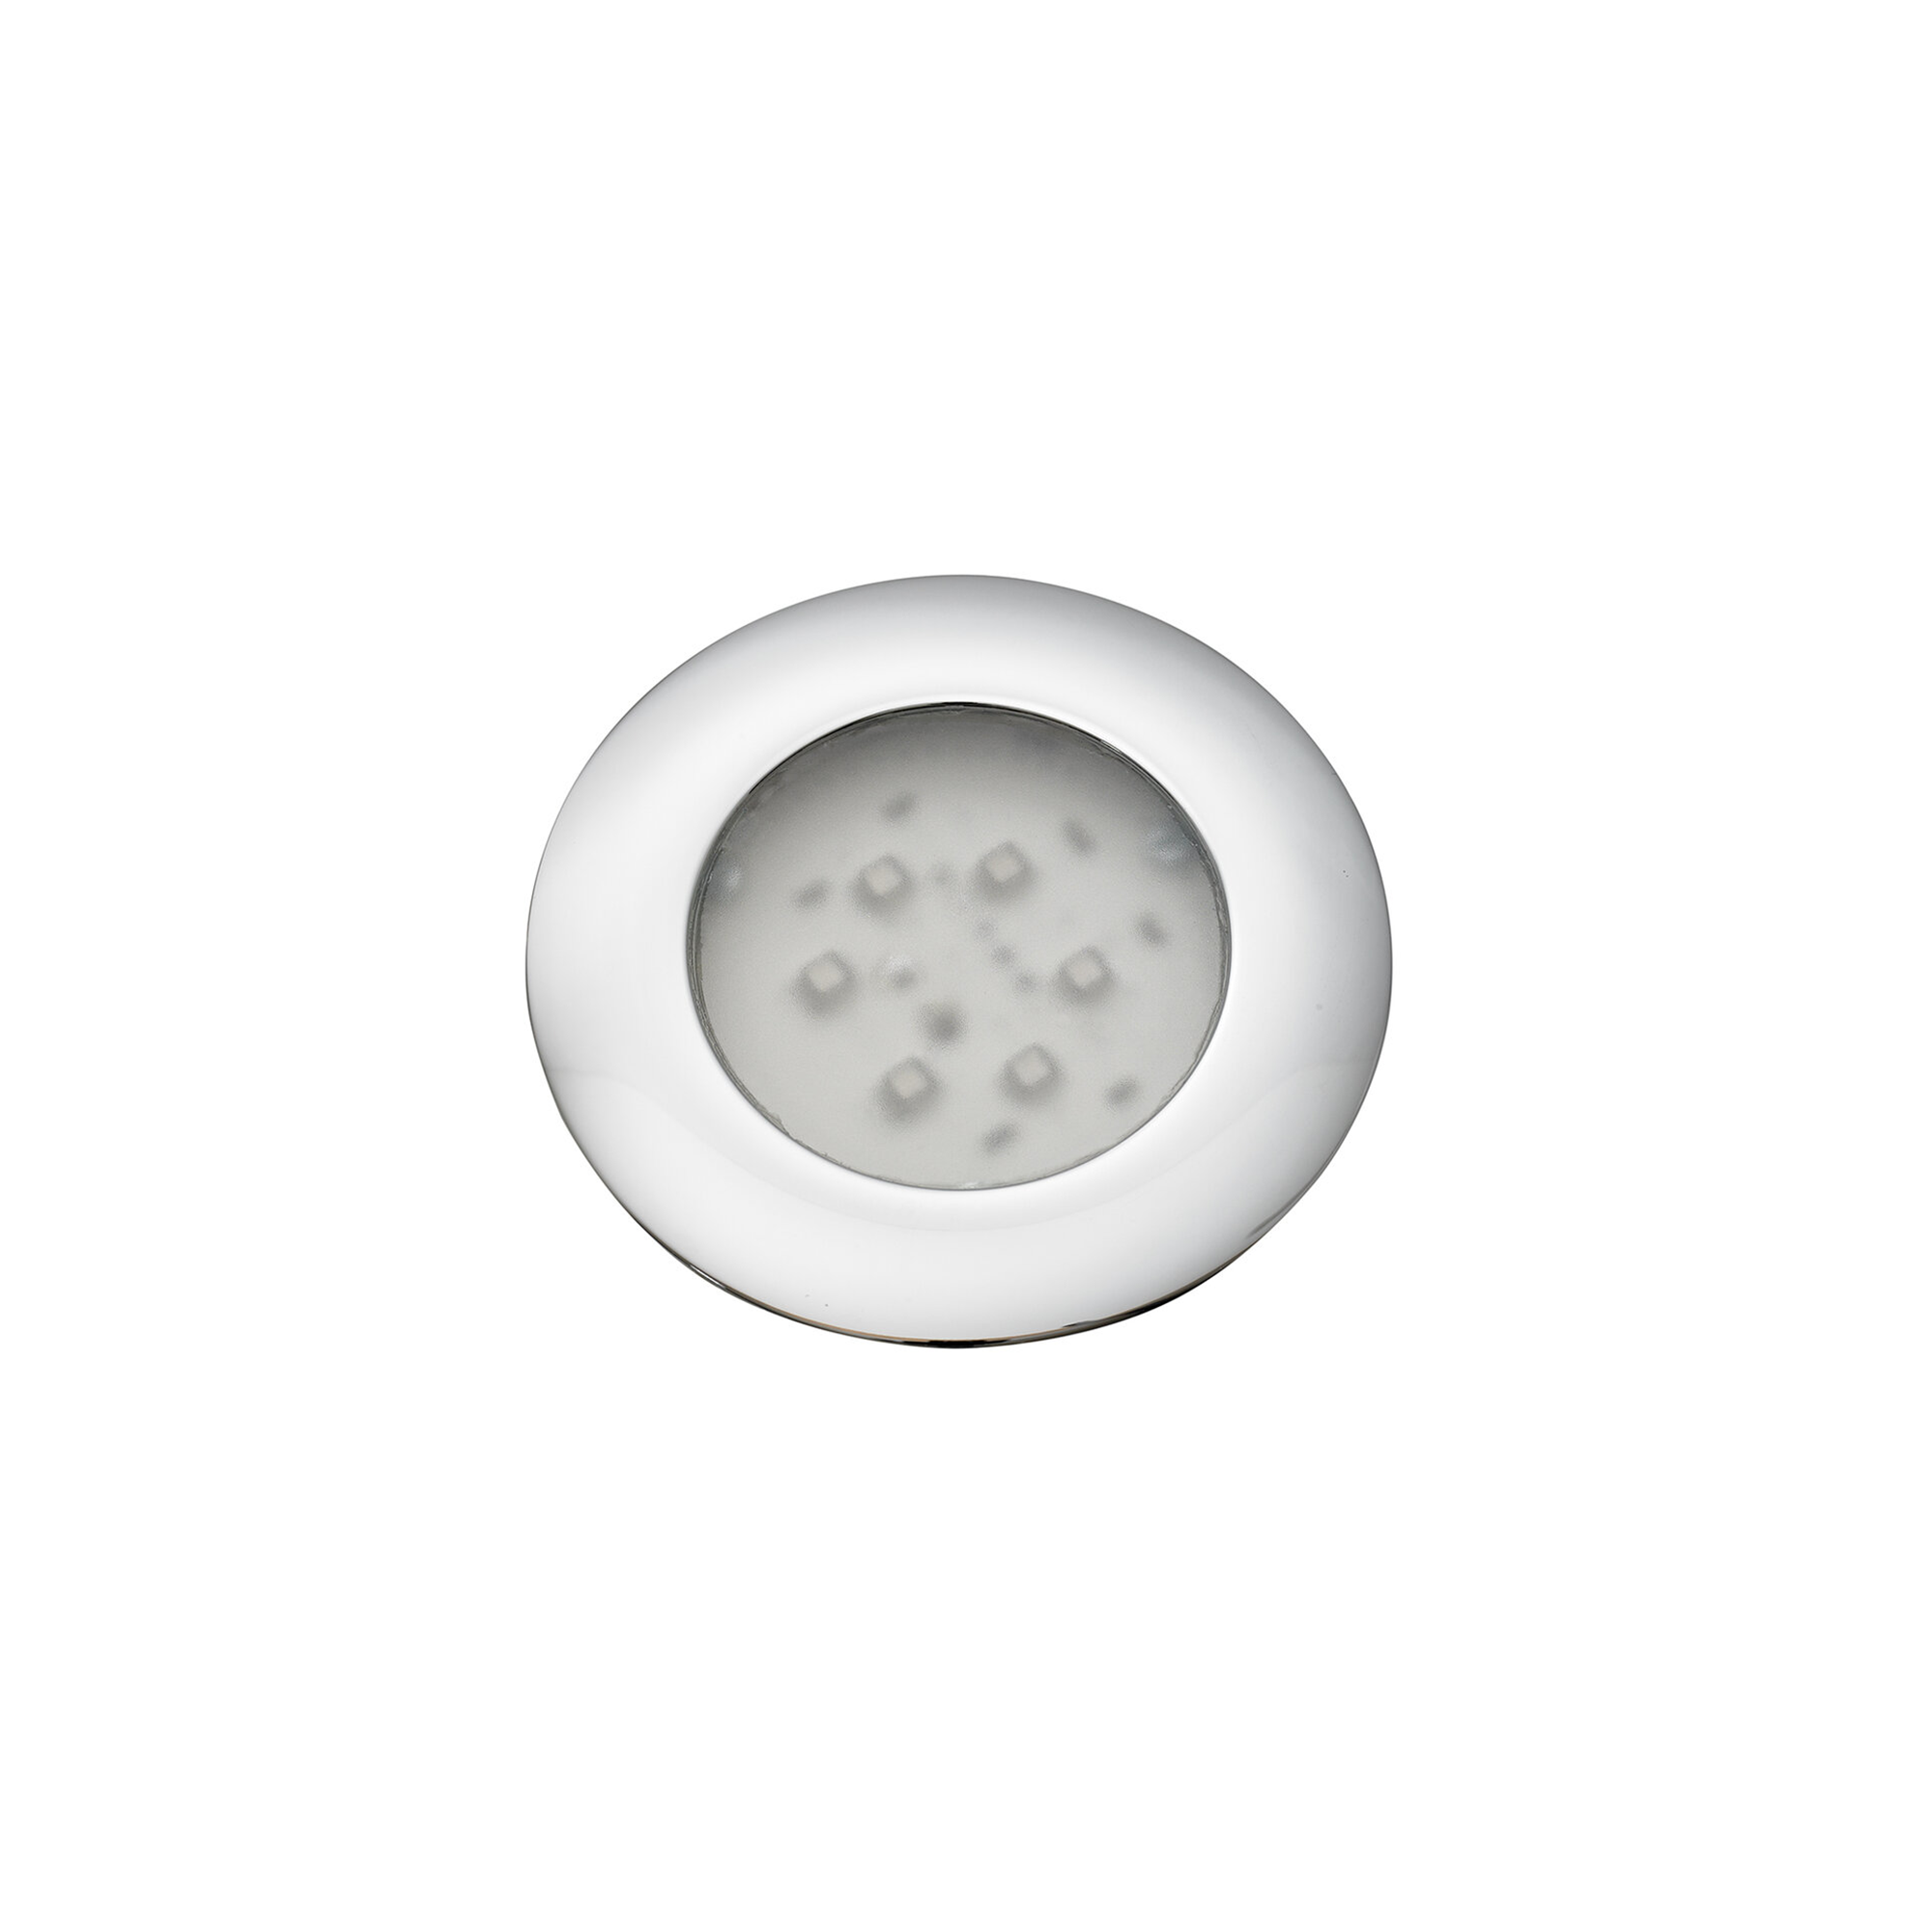 Whirlpool-Komplettset 'Cubic' Sanitäracryl weiß 180 x 80 x 49,5 cm + product picture